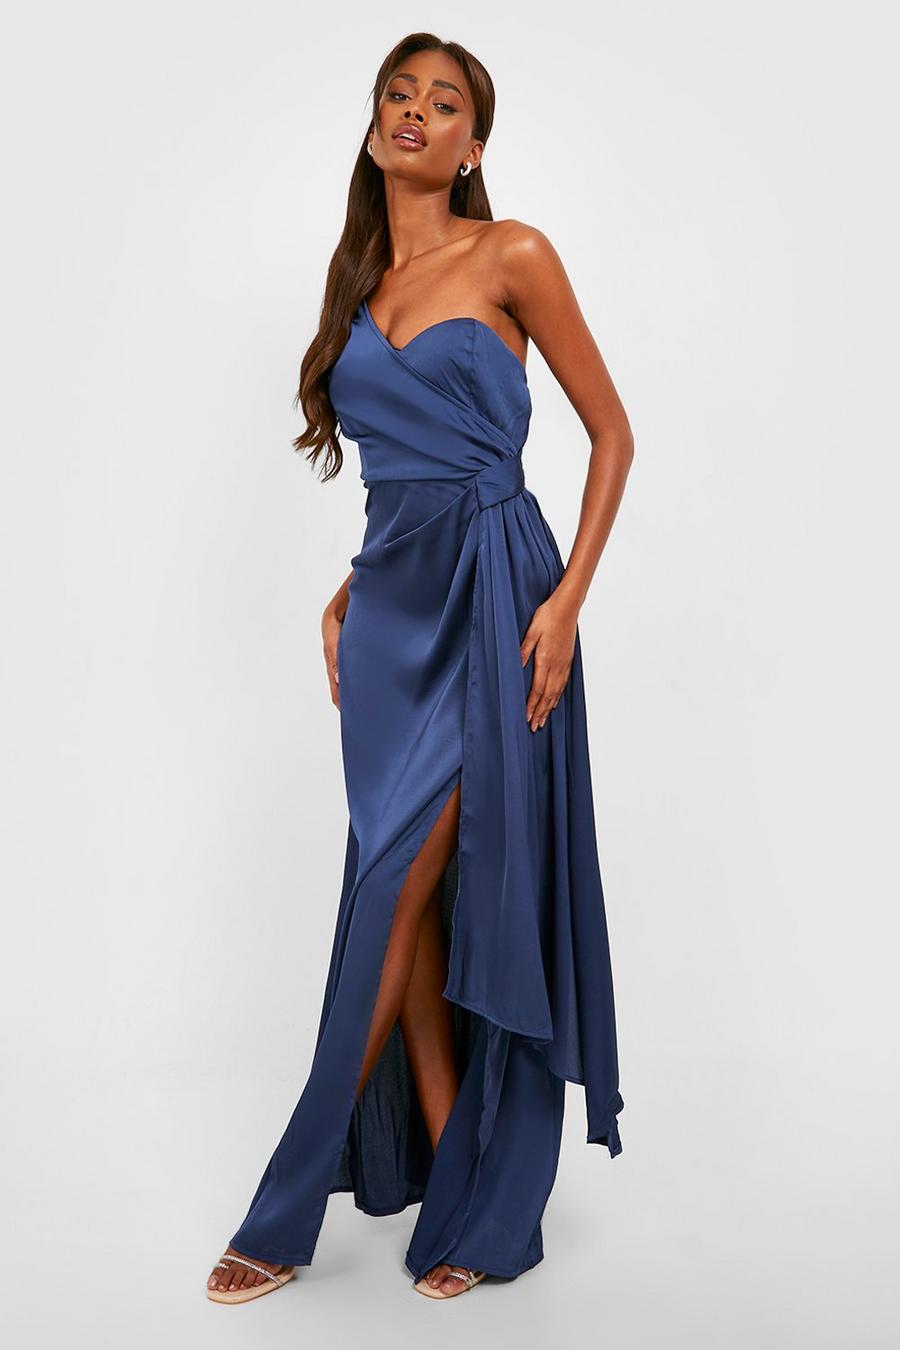 Slate Blue Satin Dress - Pleated Maxi Dress - One-Shoulder Dress - Lulus